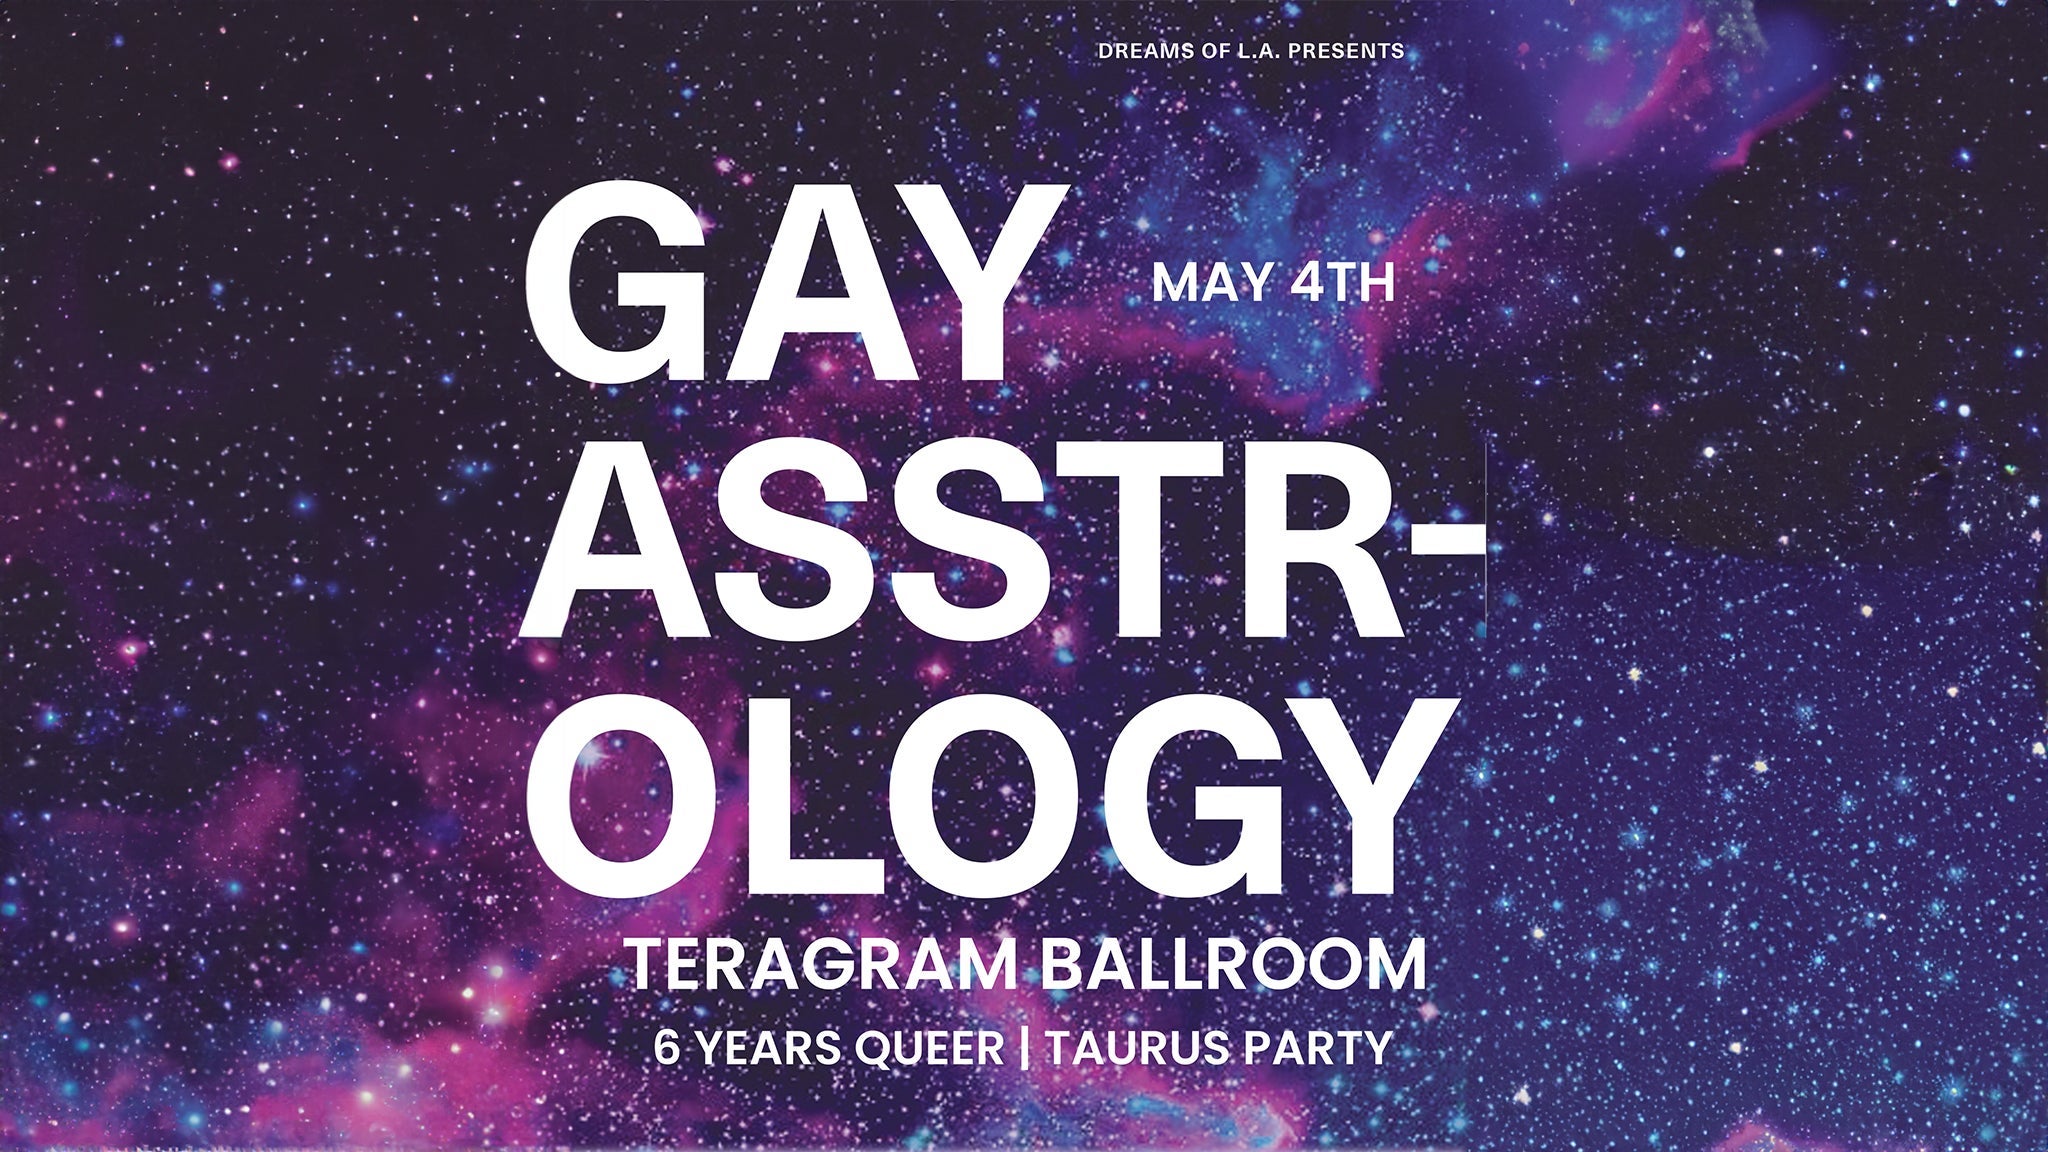 6 Years of GAYASS + Taurus Party at Teragram Ballroom